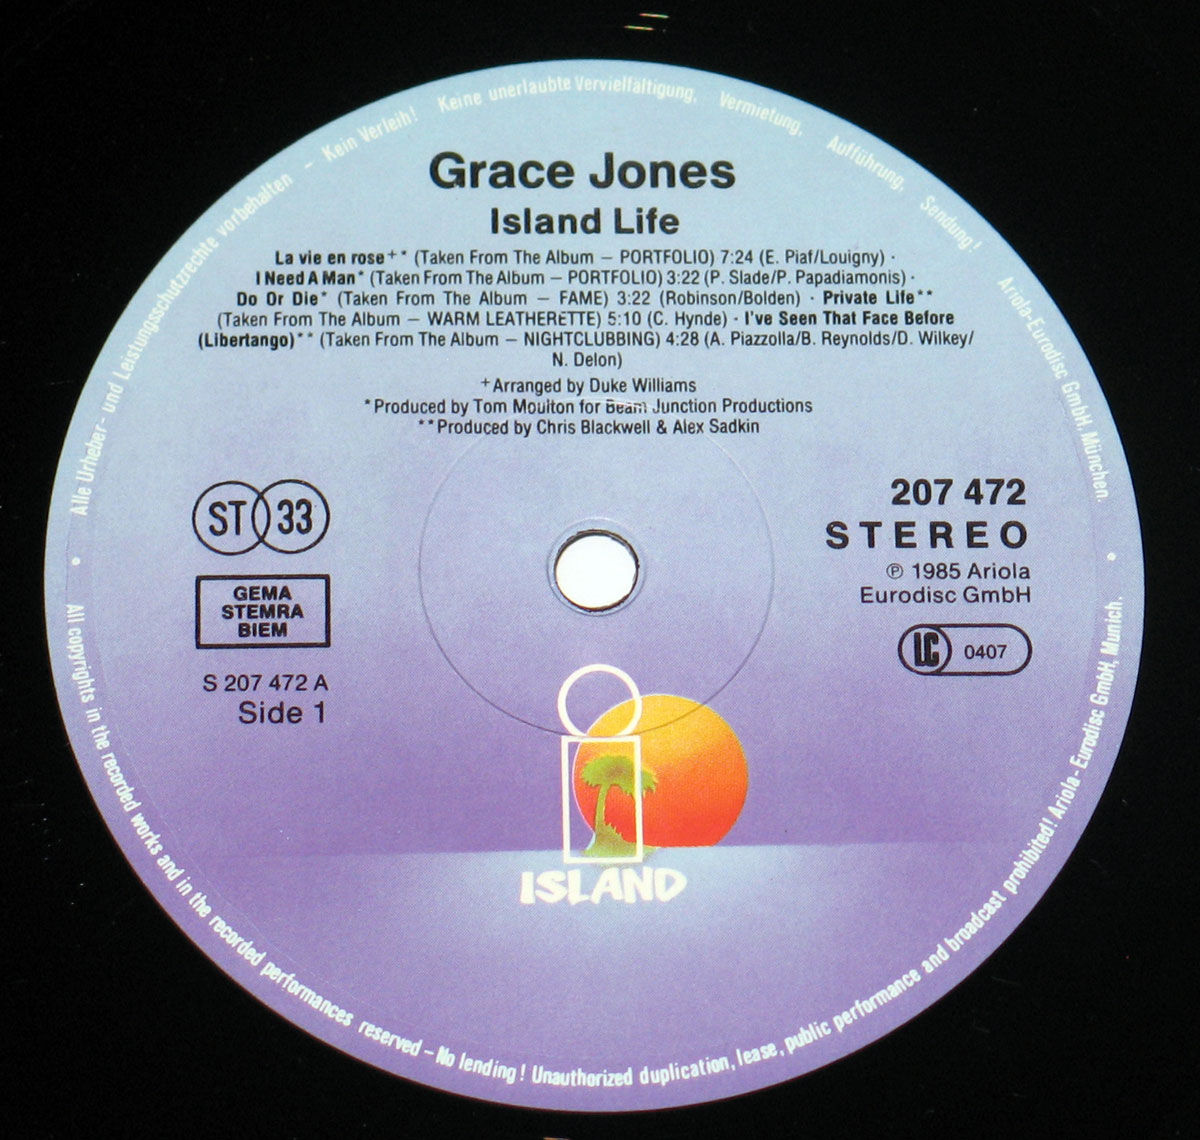 High Resolution Photo of Grace Jones album 